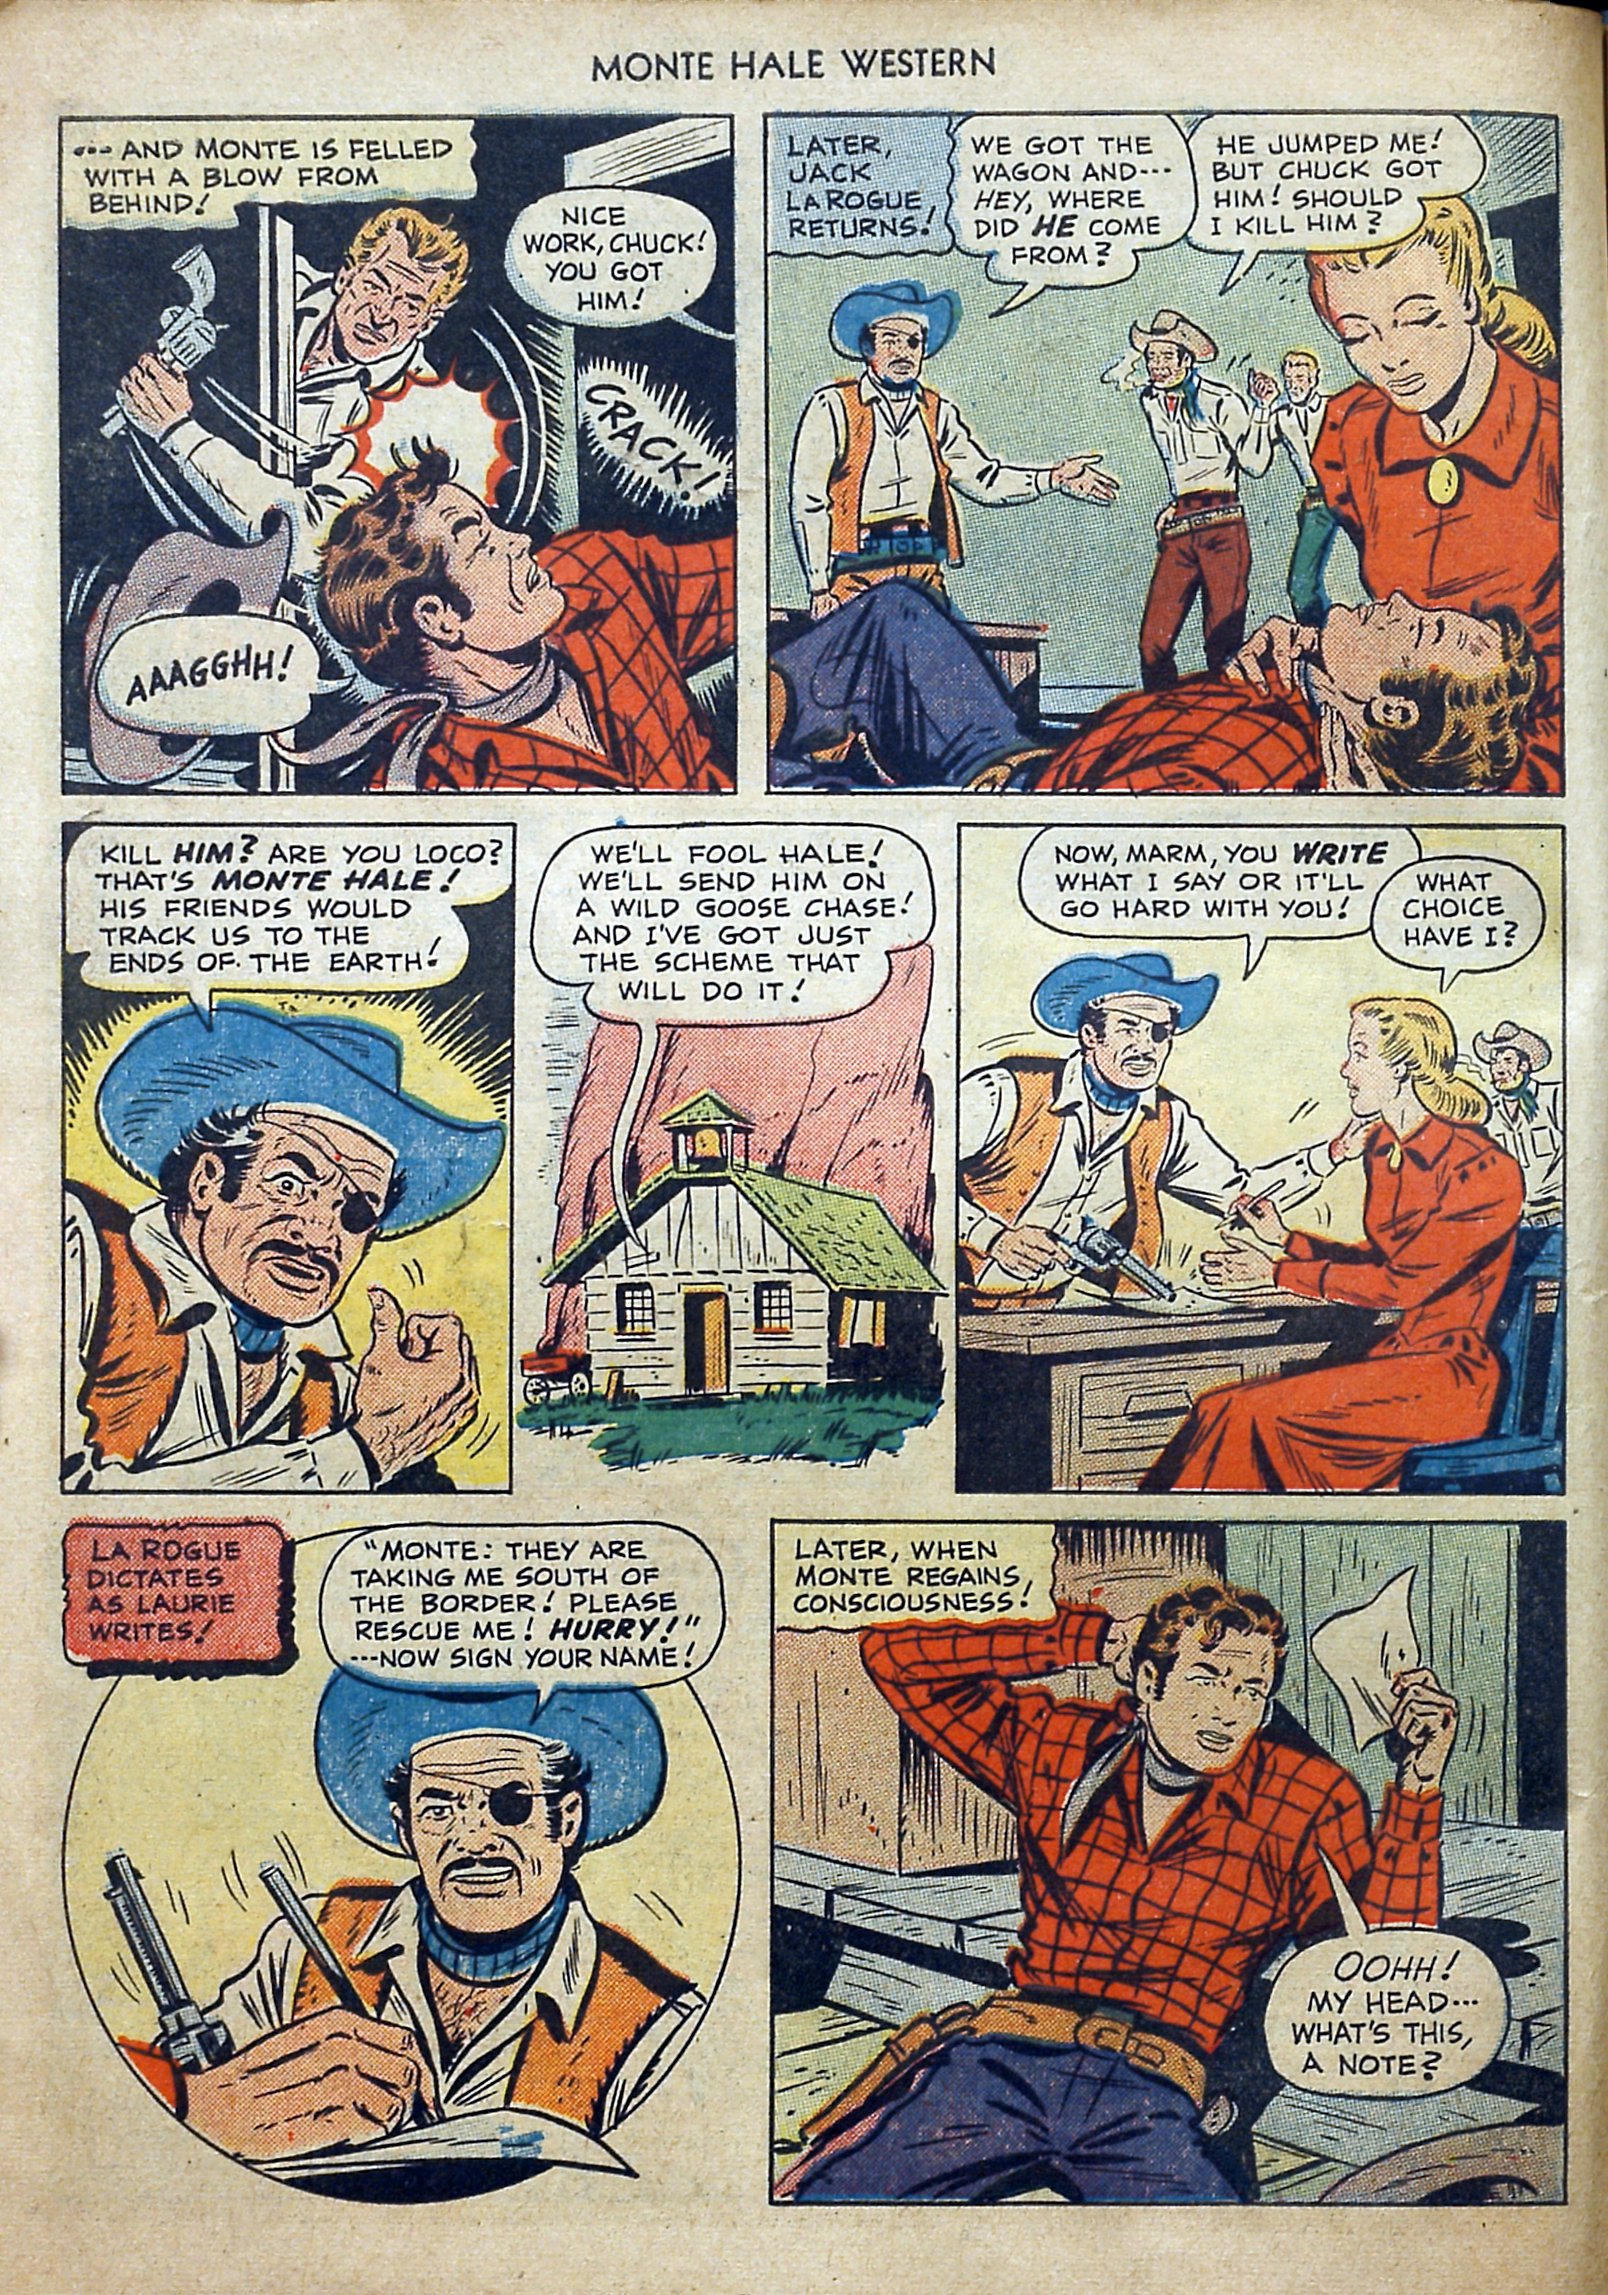 Read online Monte Hale Western comic -  Issue #46 - 10